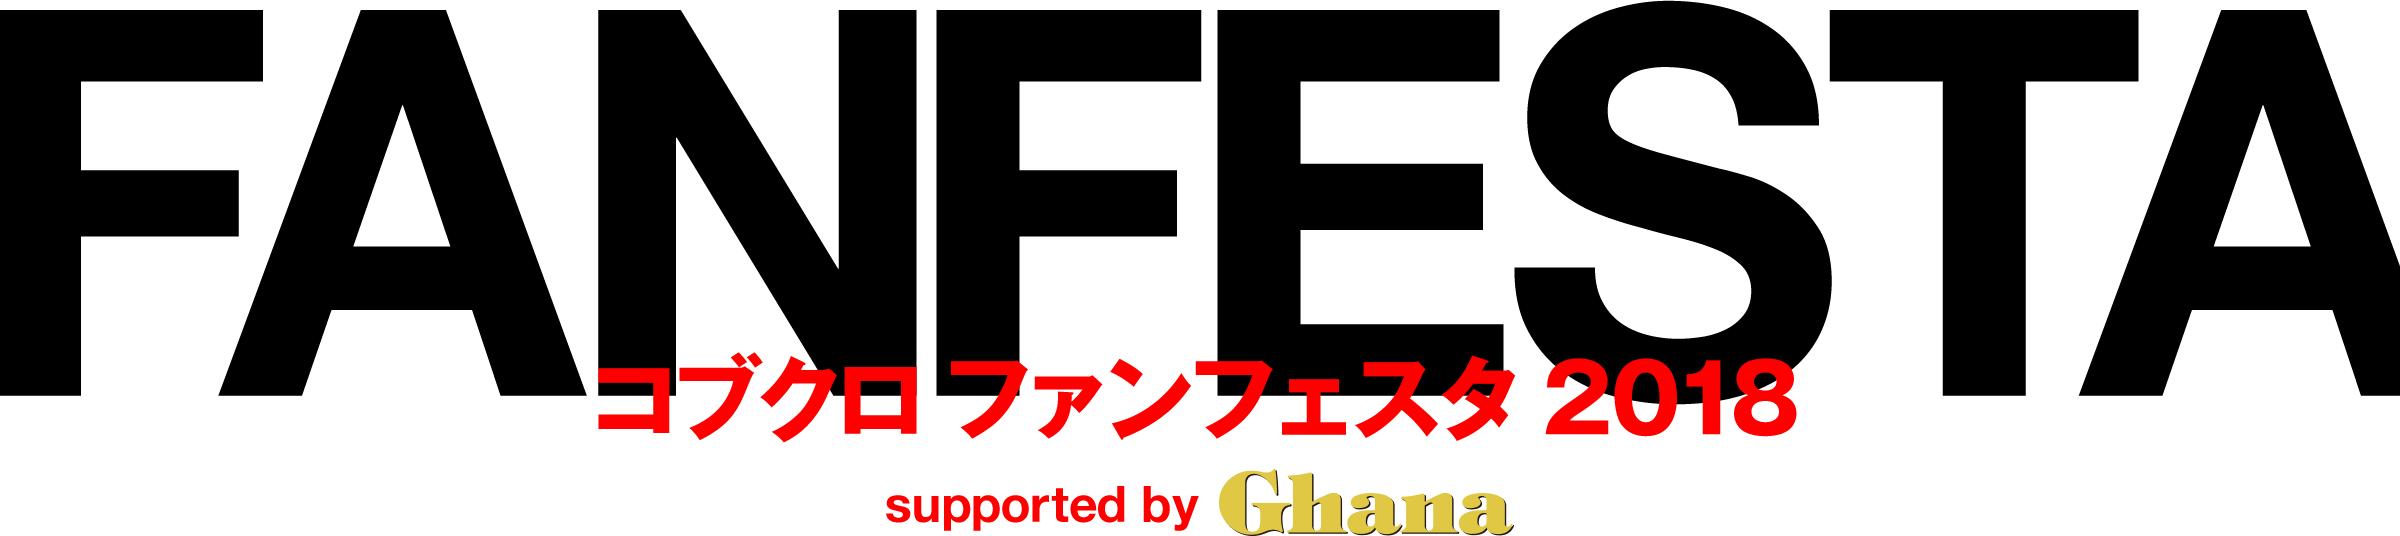 KOBUKURO FANFESTA 2018 supported by Ghana